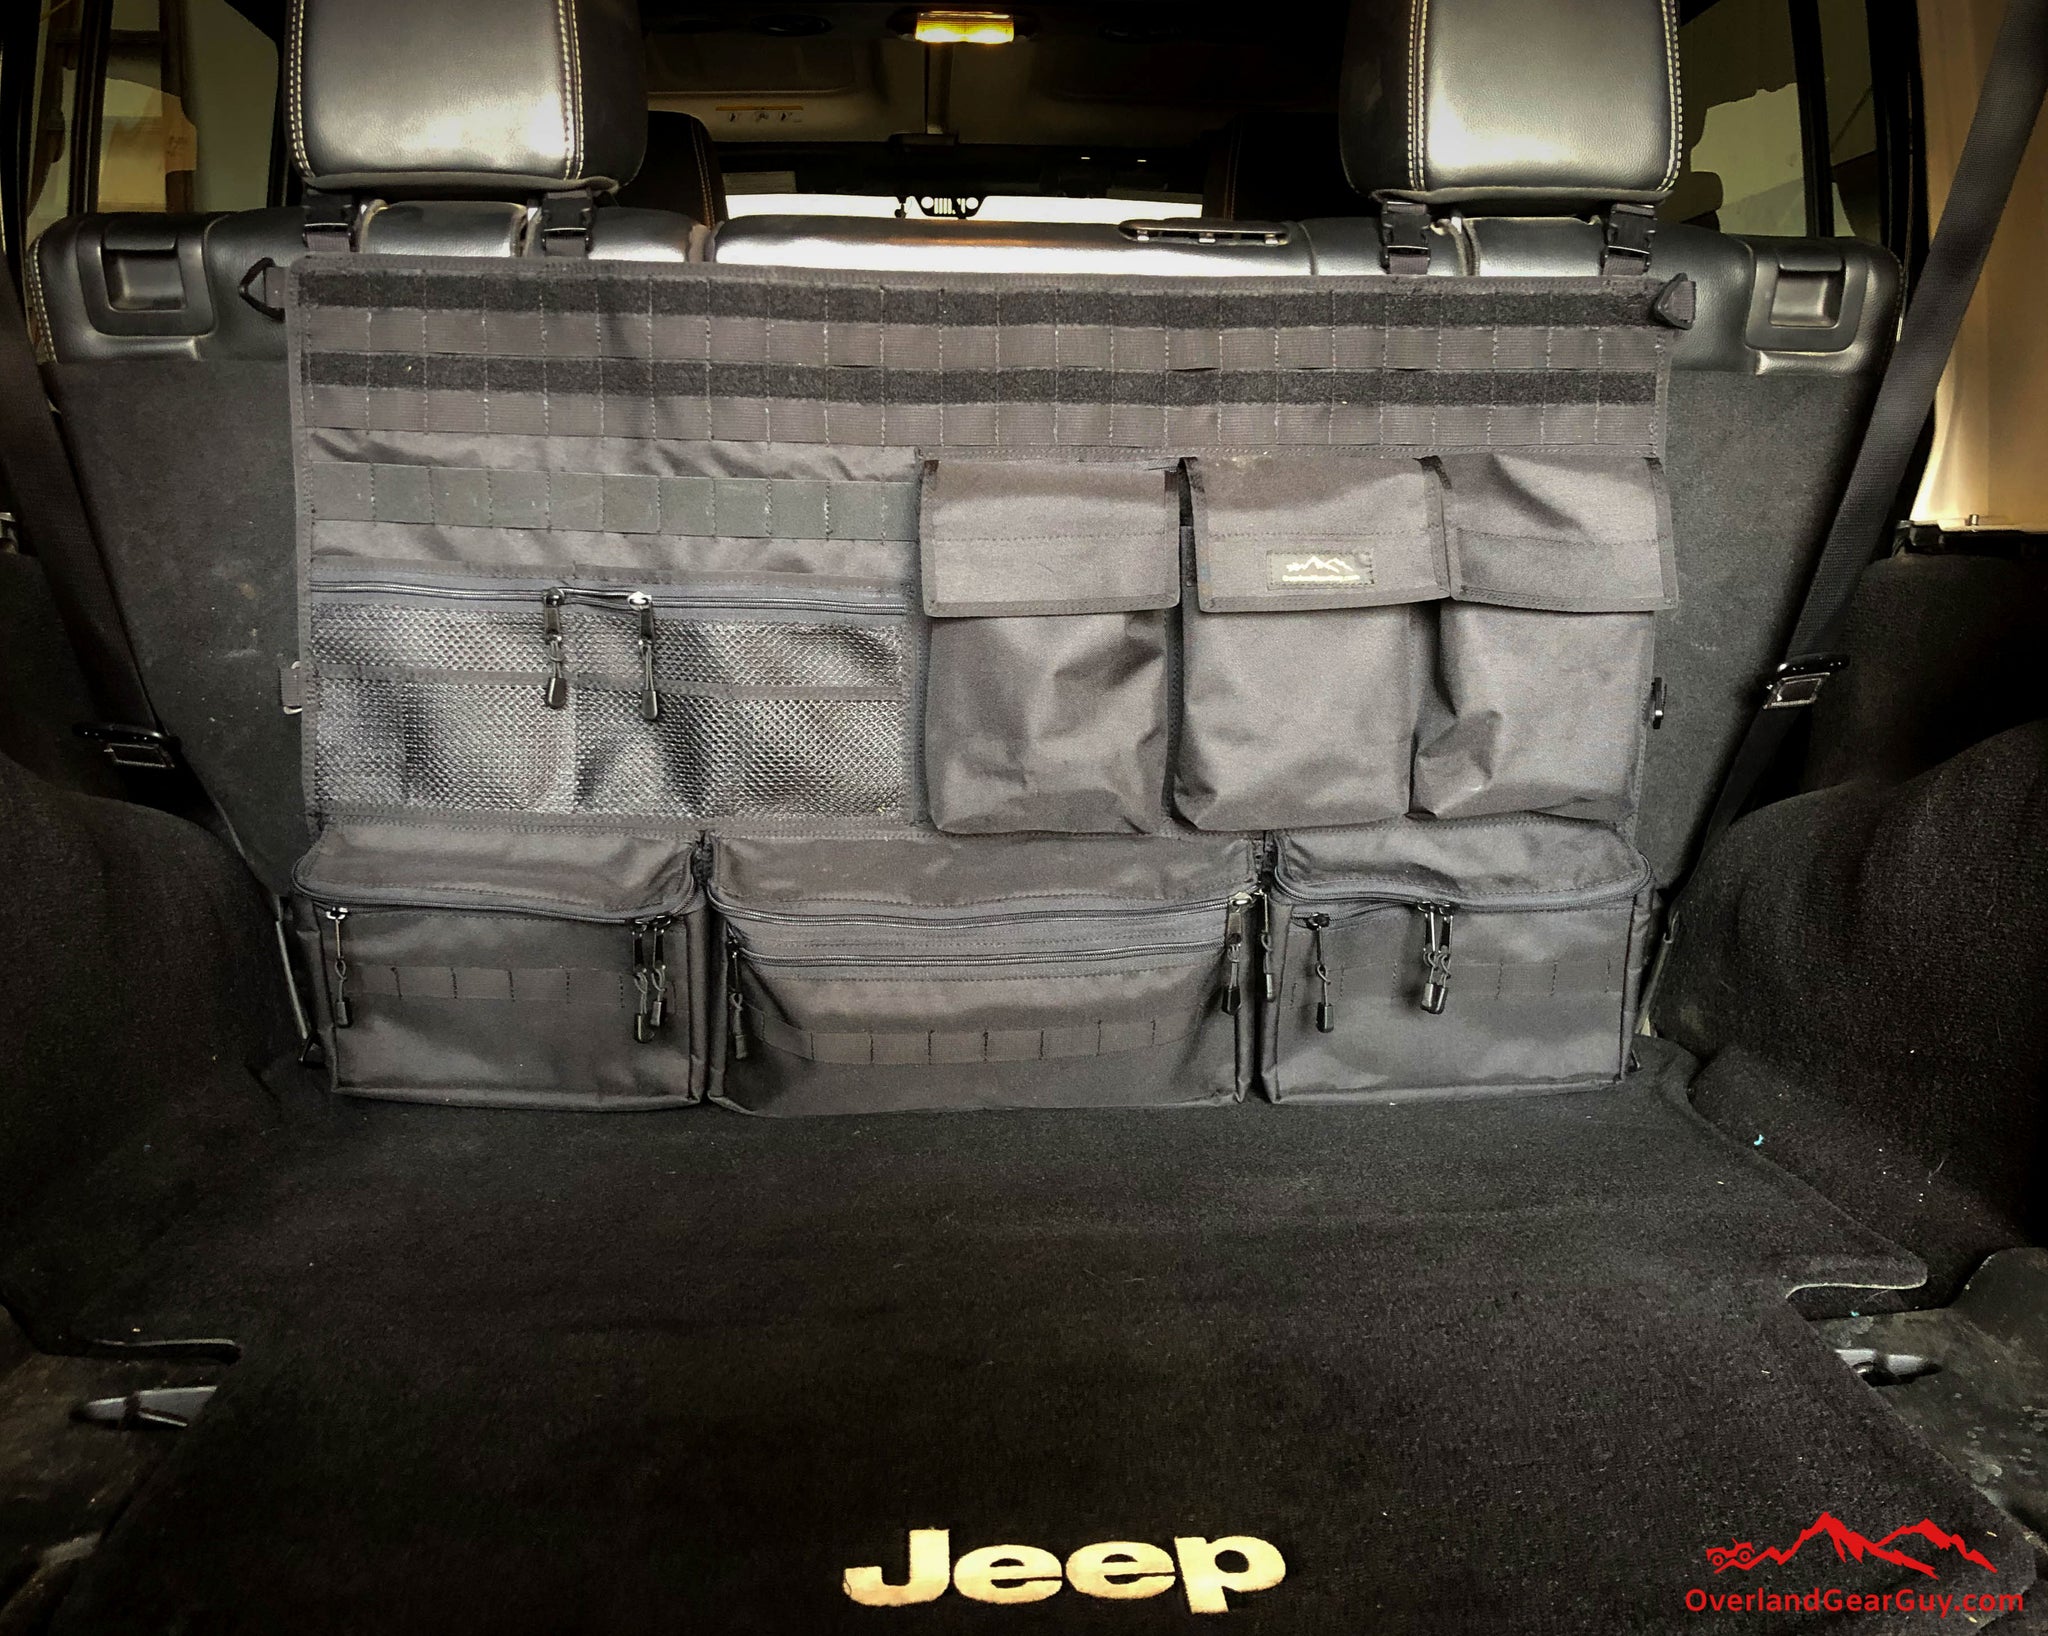 Jeep Rear Organizer - Jeep Vehicle Storage by Overland Gear Guy